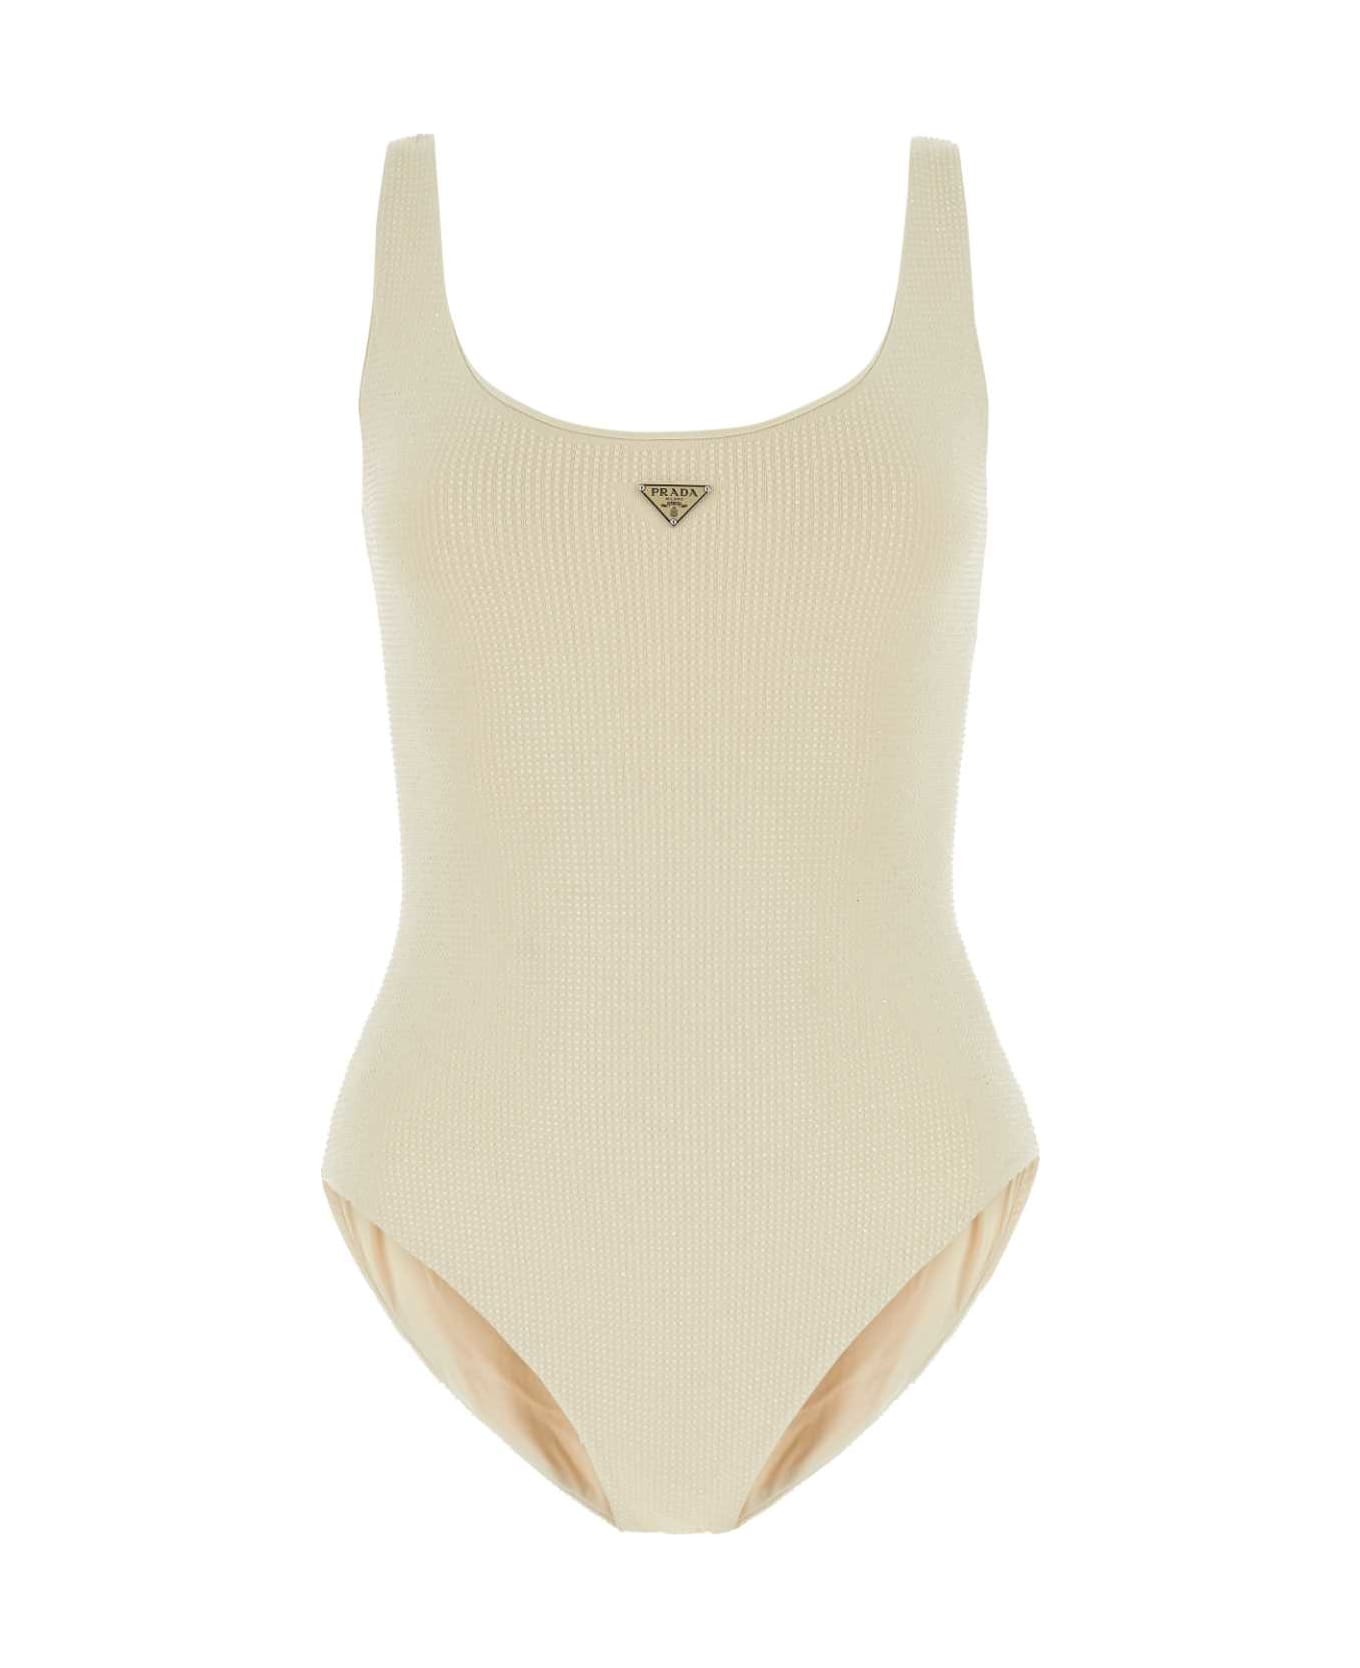 Prada Embellished Stretch Nylon Swimsuit - NUDOTRASPARE